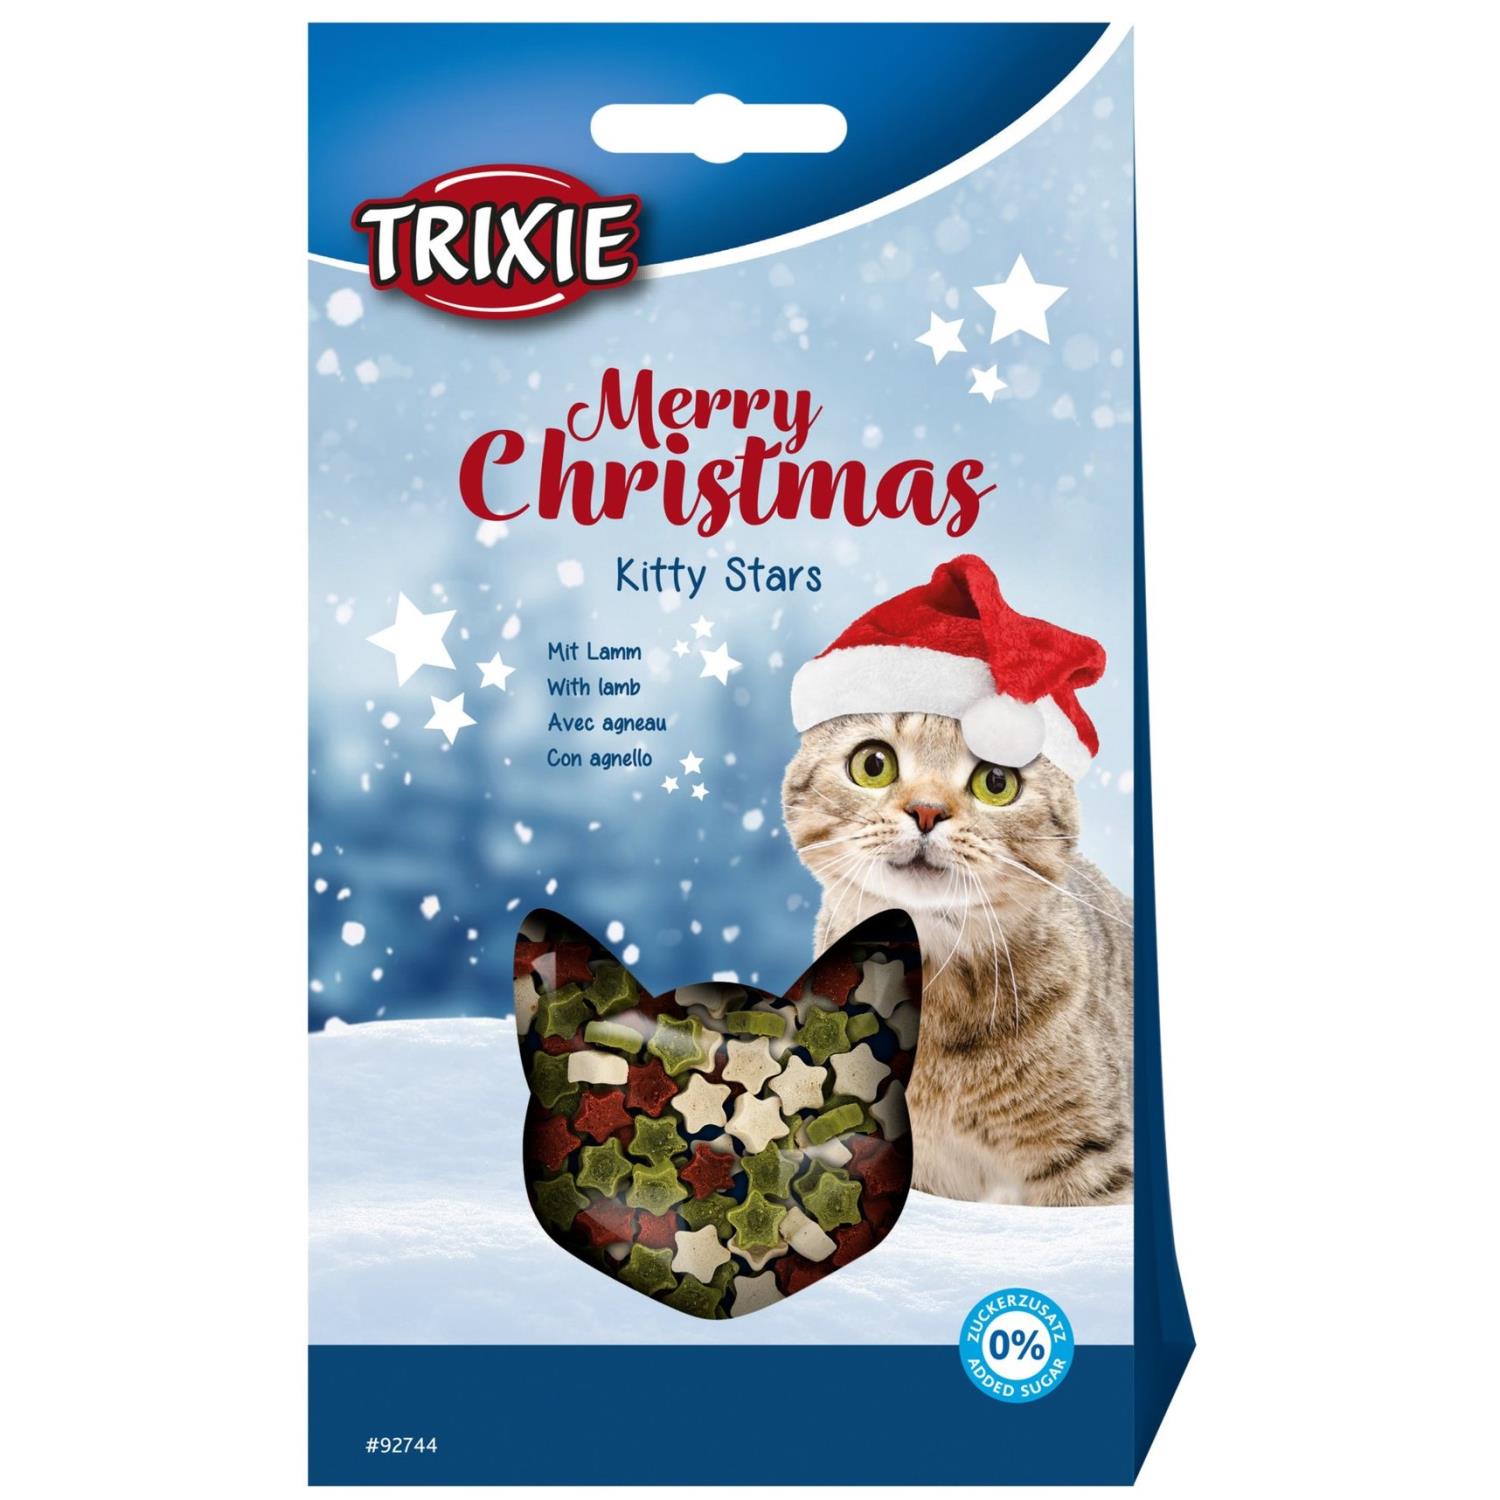 Trixie Kitty Stars (Merry Christmas) 140g